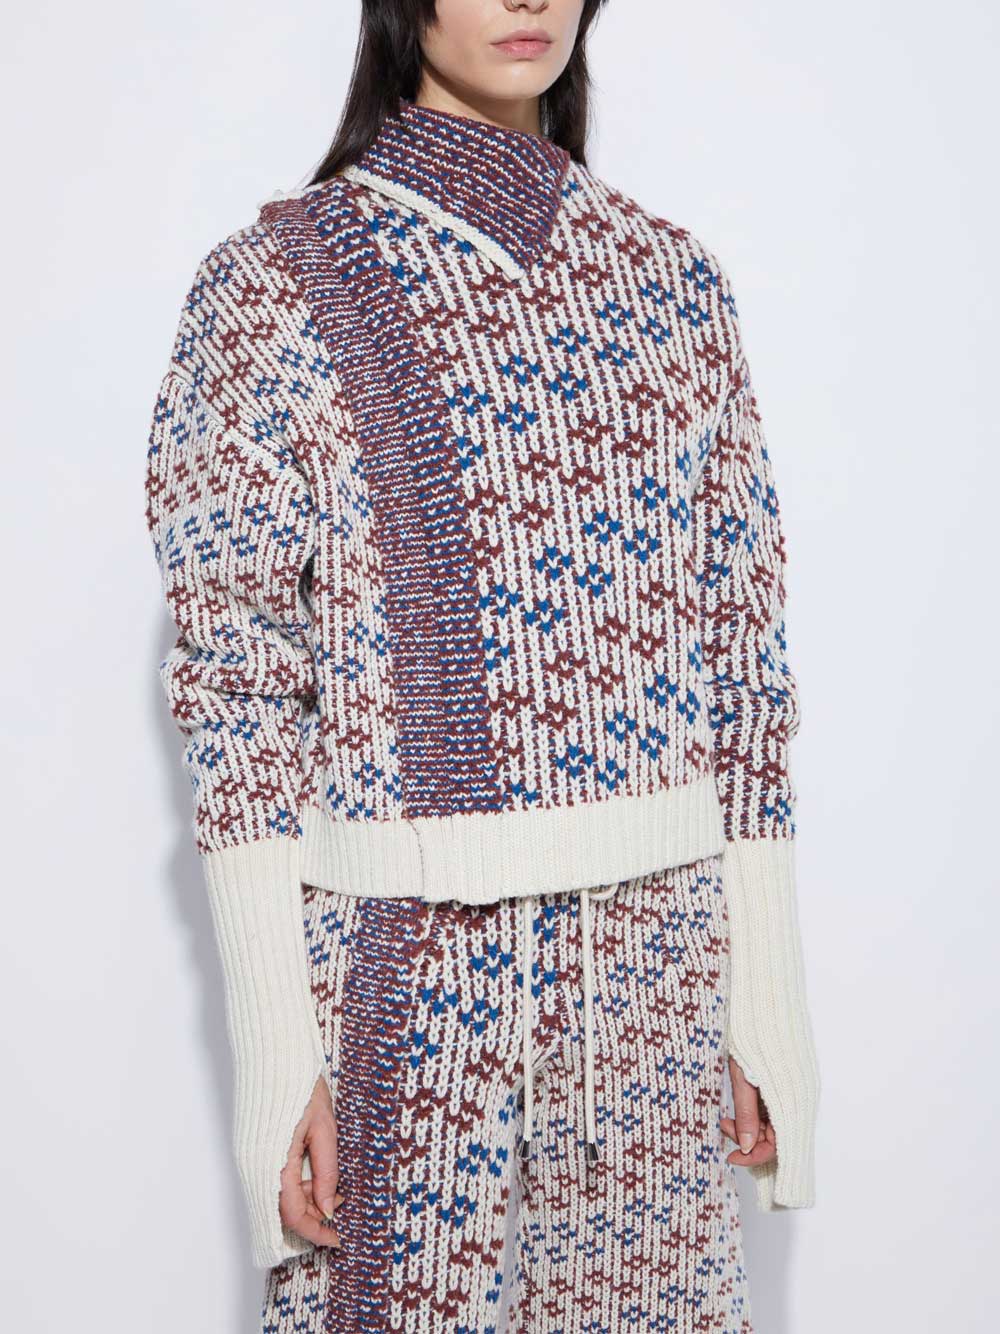 Jacquard sweater with geometric pattern